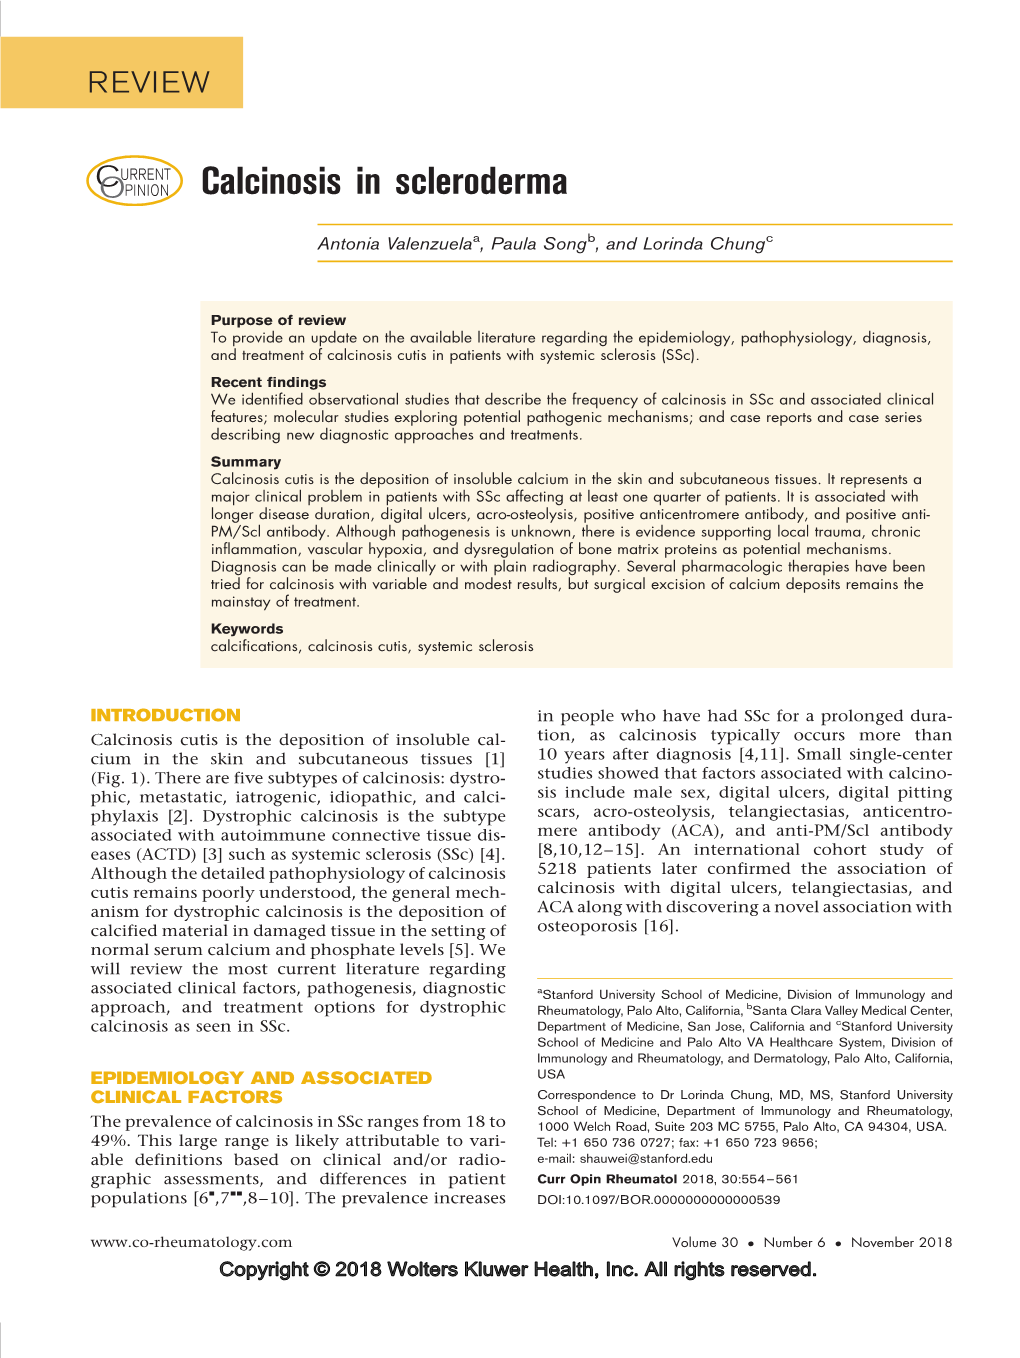 Calcinosis in Scleroderma